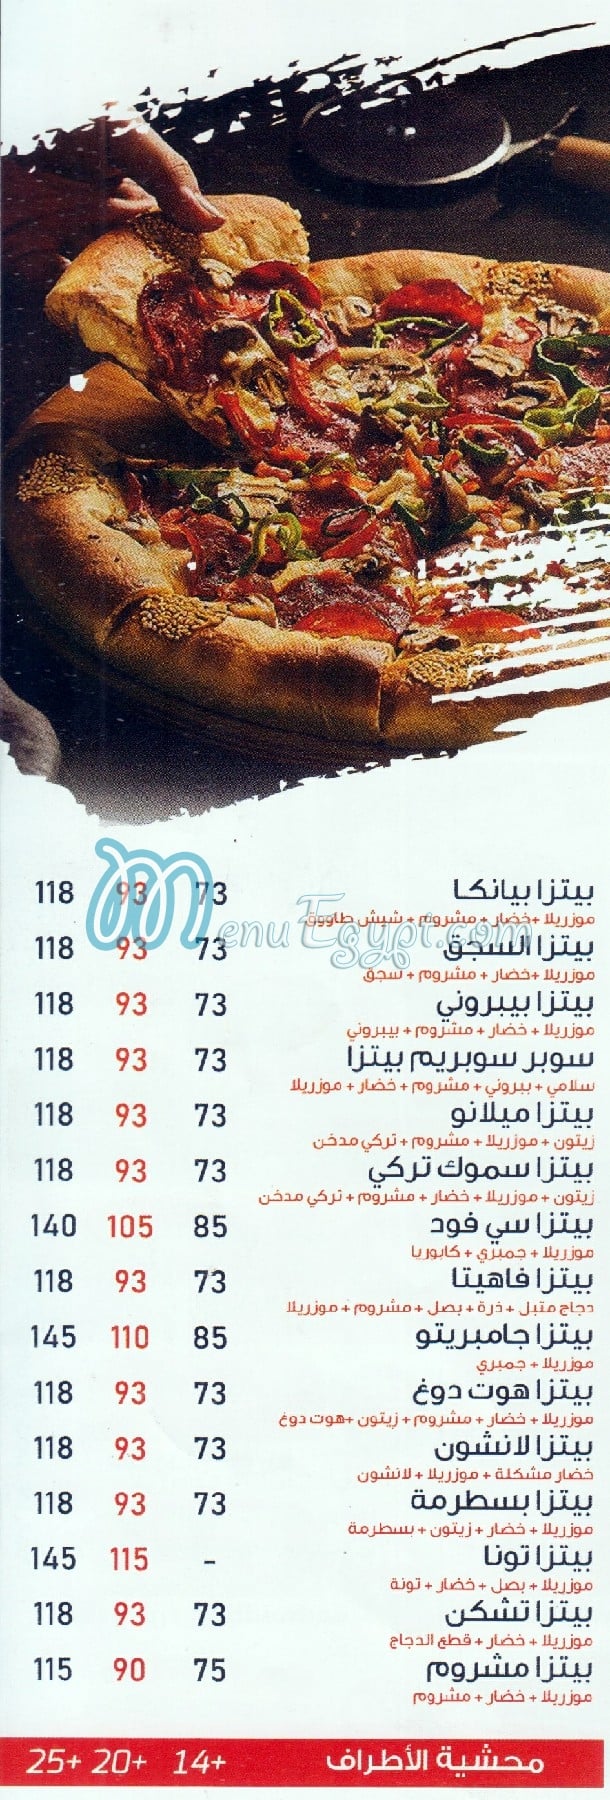 Rosto El Sheikh Zayed menu prices